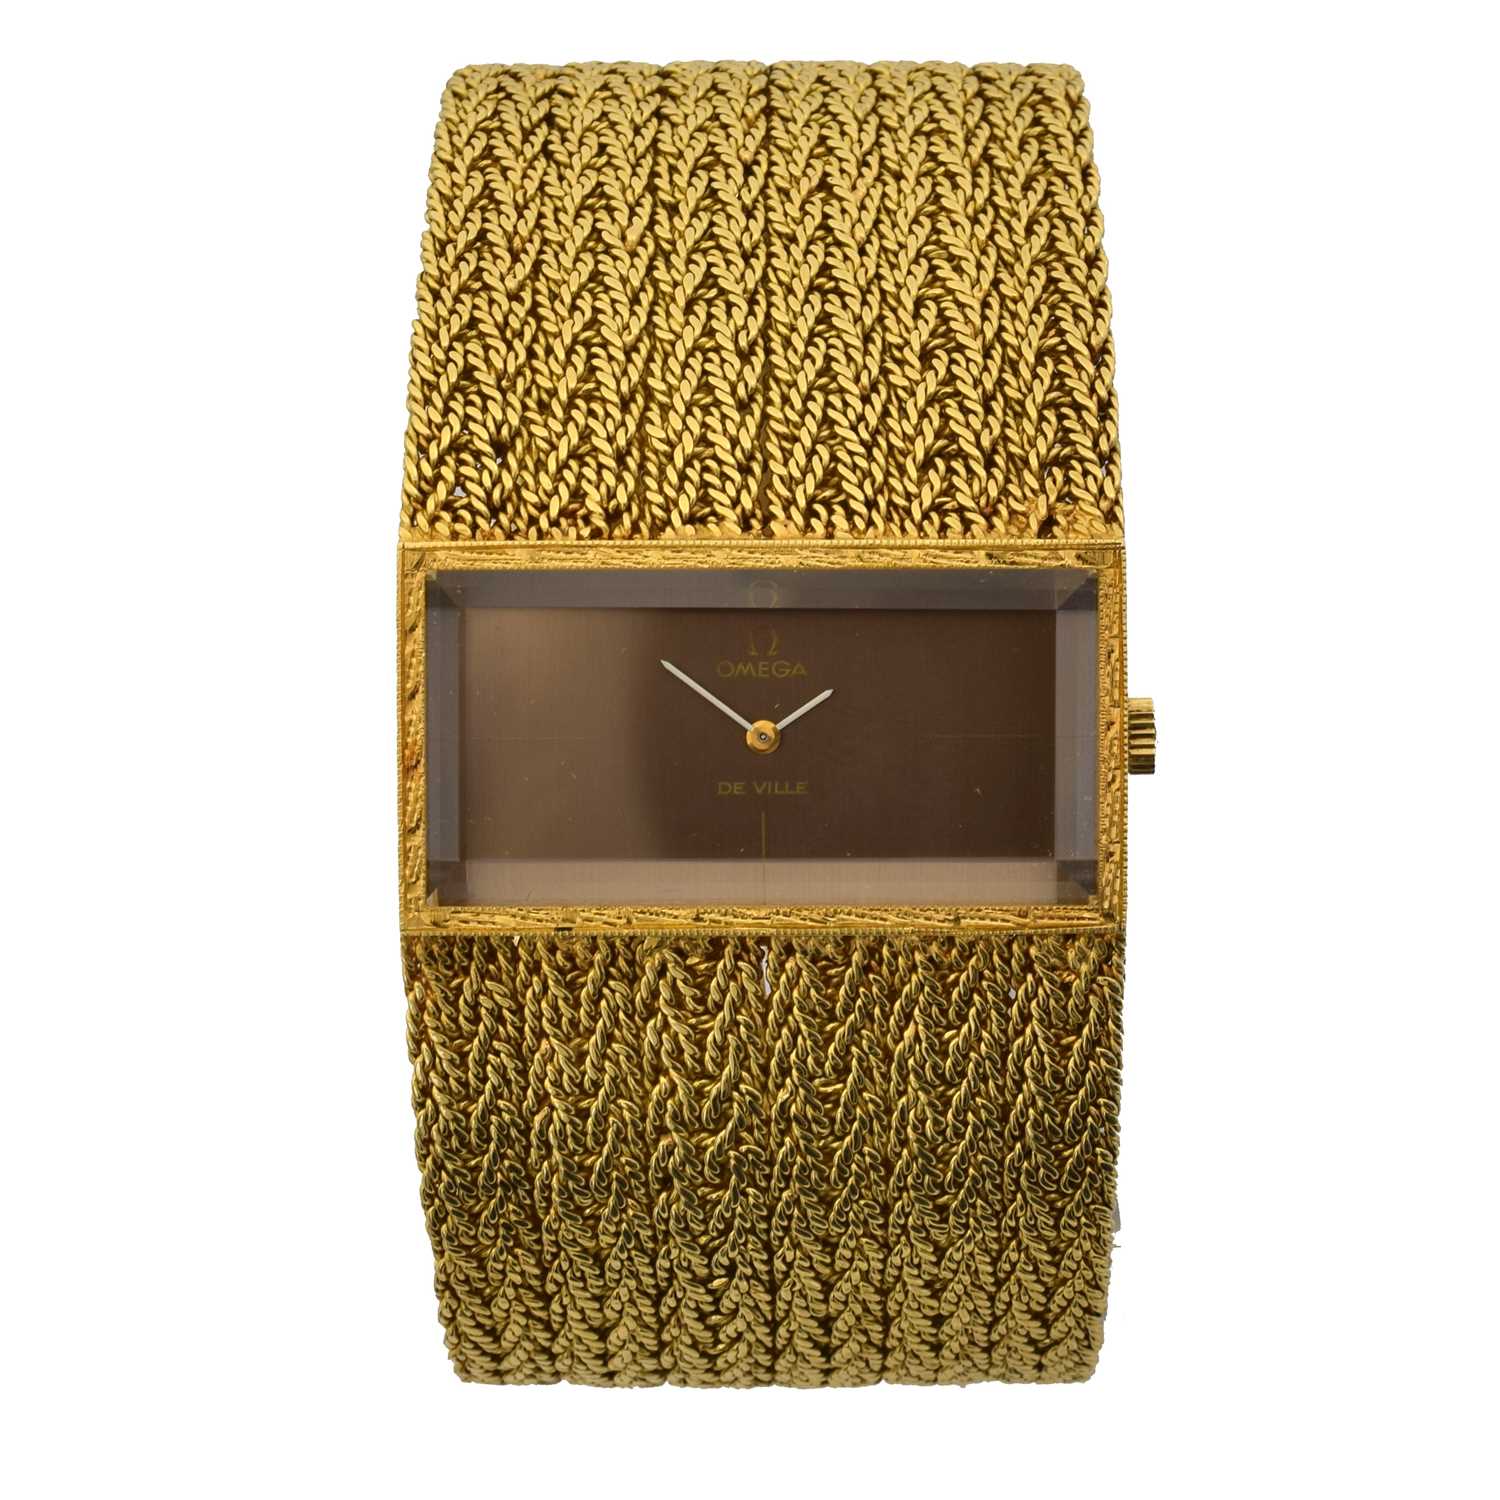 275 - A 1970s 18ct gold Omega De Ville manual wind wristwatch, ref. 97320/8270.